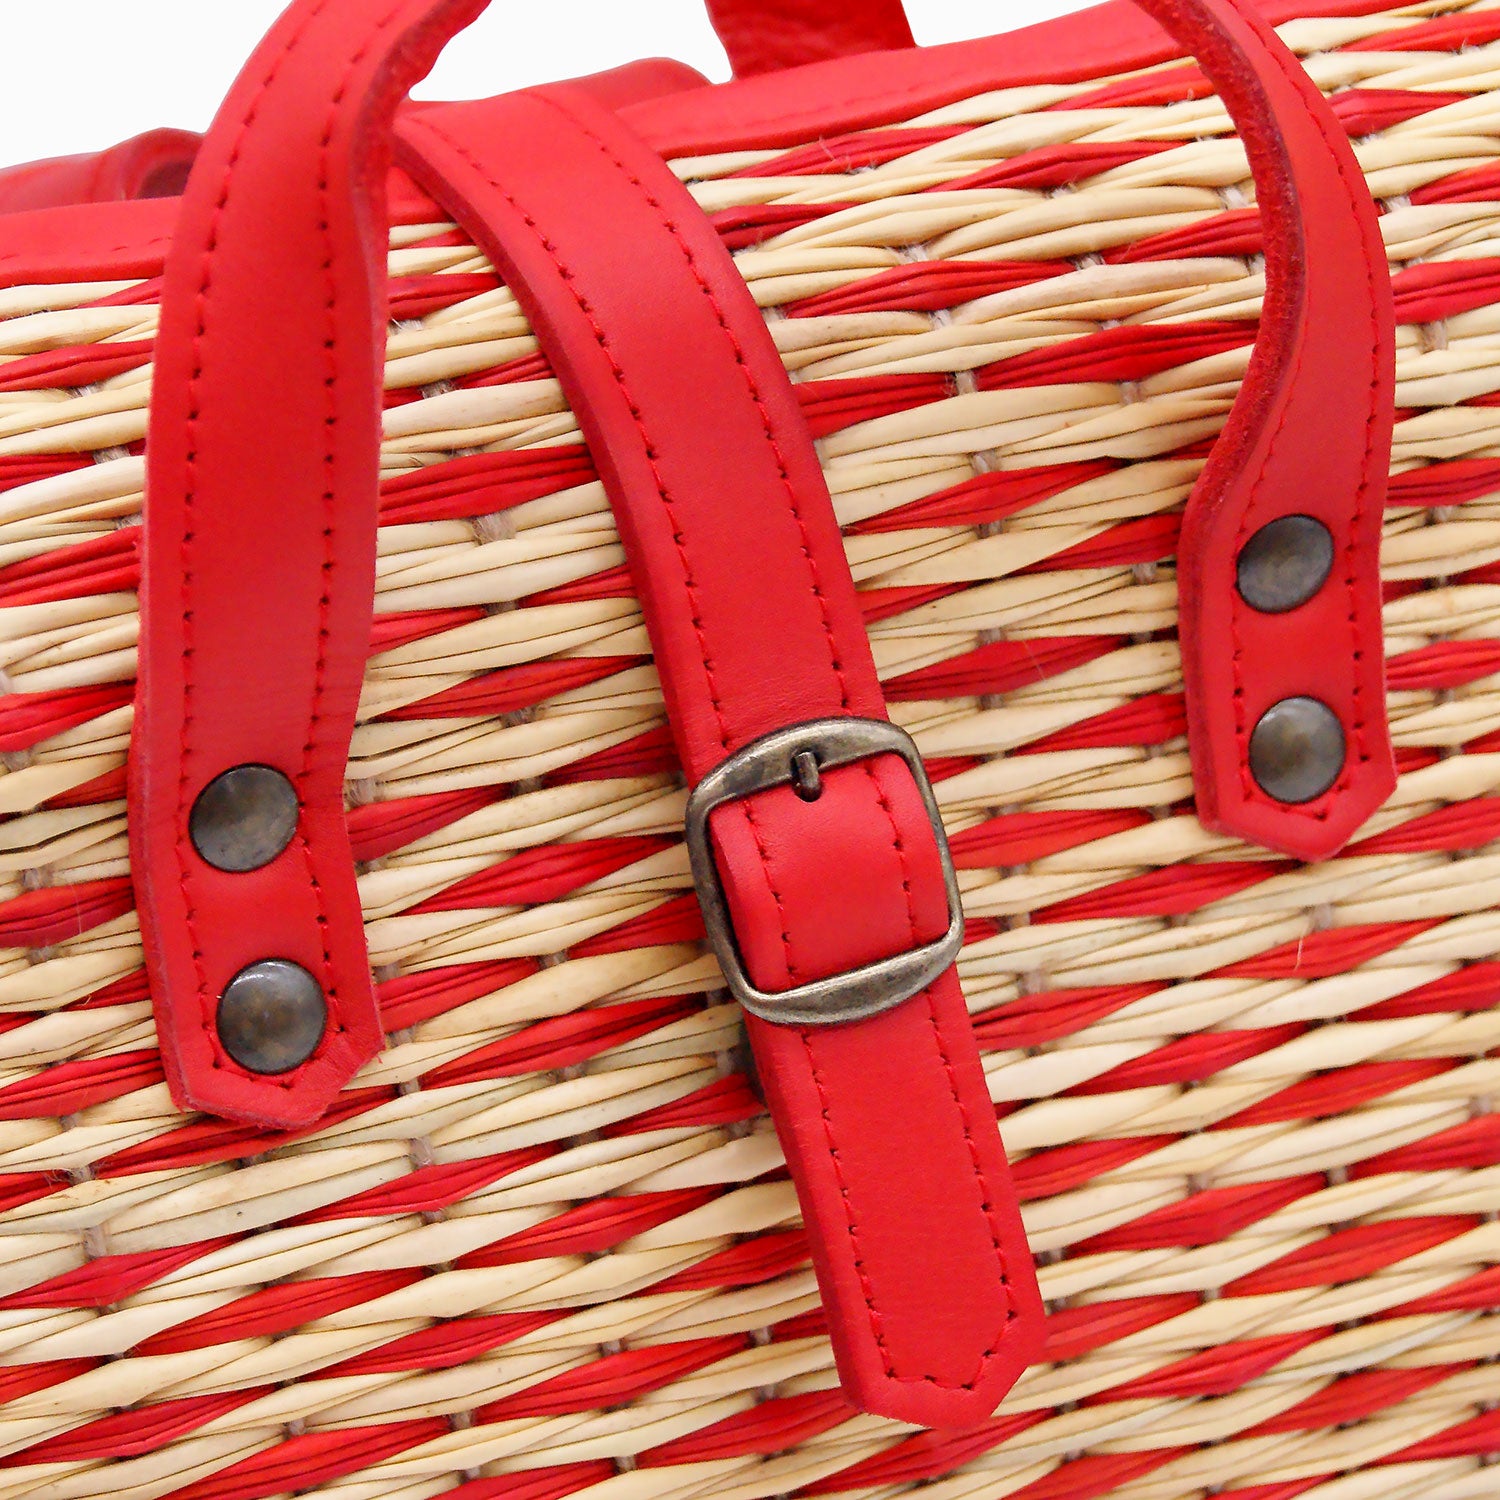 Handmade Wicker Straw Basket Laptop Backpack for Women Made in Portugal